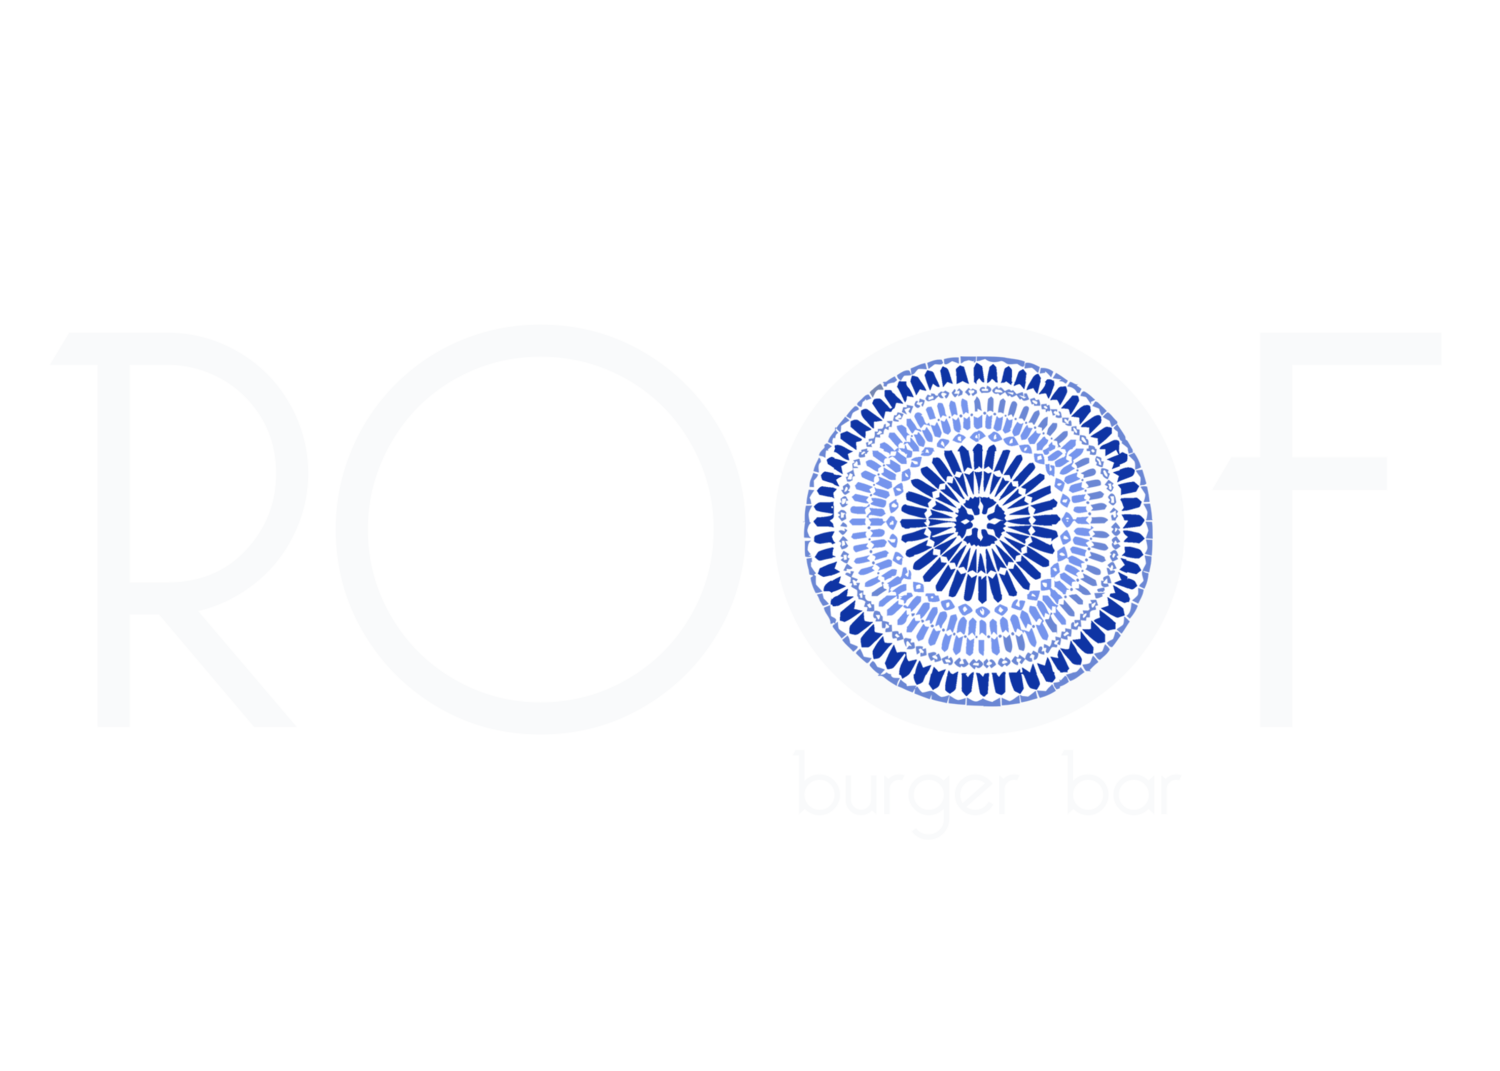 Roof Burger Bar